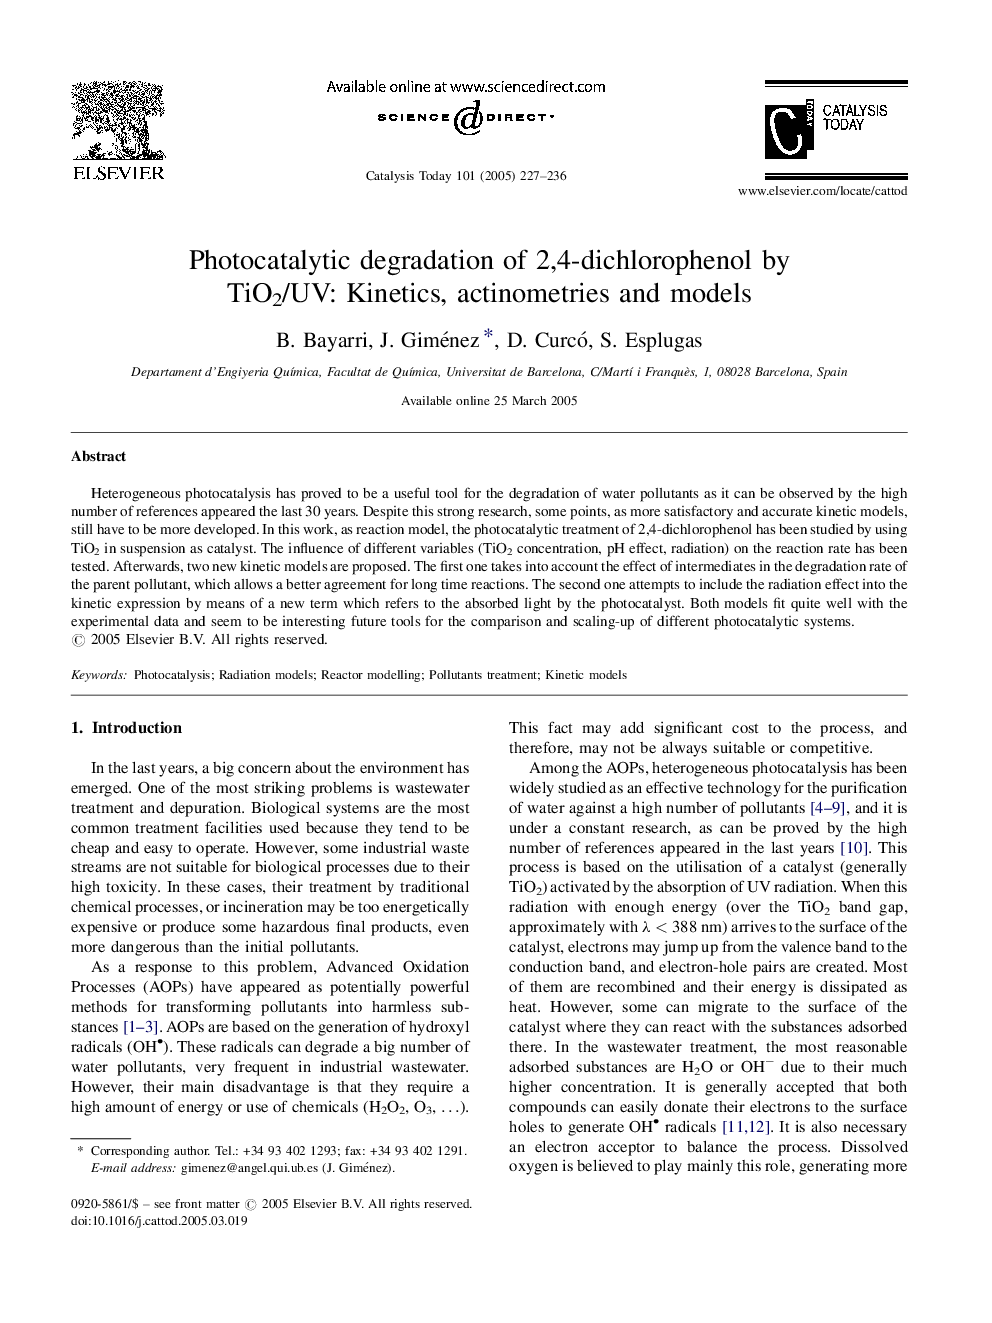 Photocatalytic degradation of 2,4-dichlorophenol by TiO2/UV: Kinetics, actinometries and models